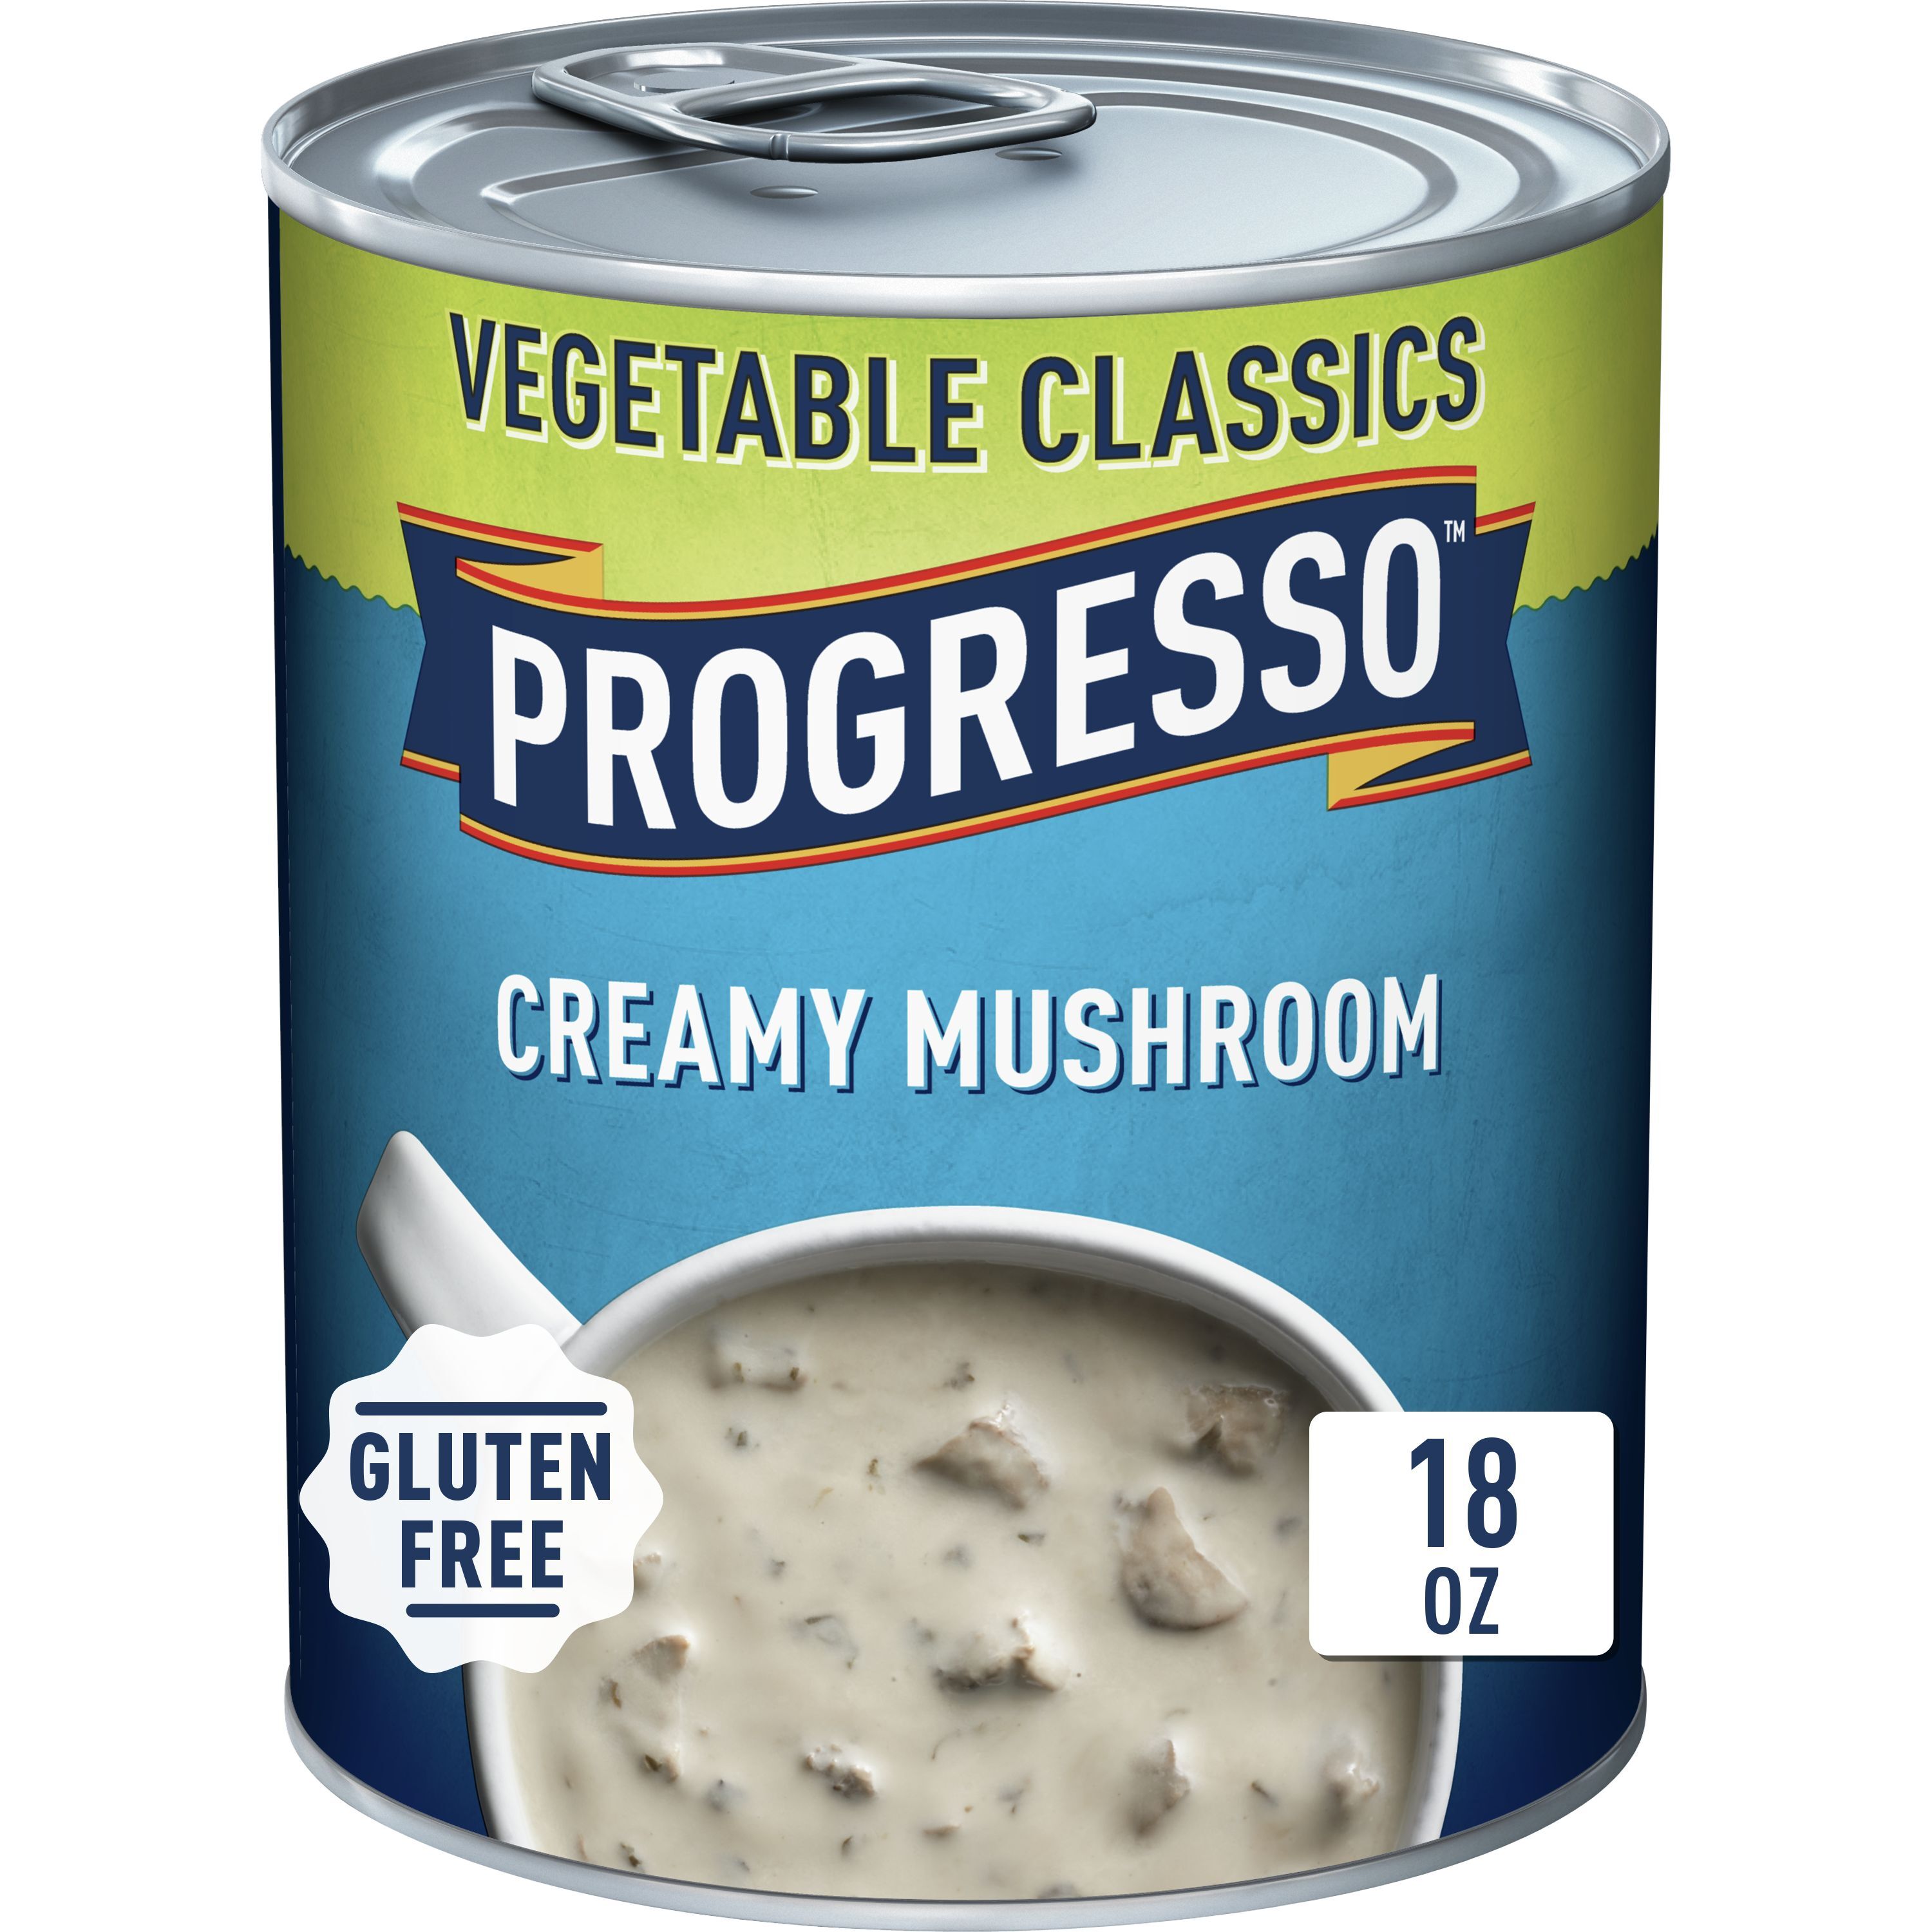 Progresso Vegetable Classics, Creamy Mushroom Canned Soup, Gluten Free, 18 oz. - image 1 of 10